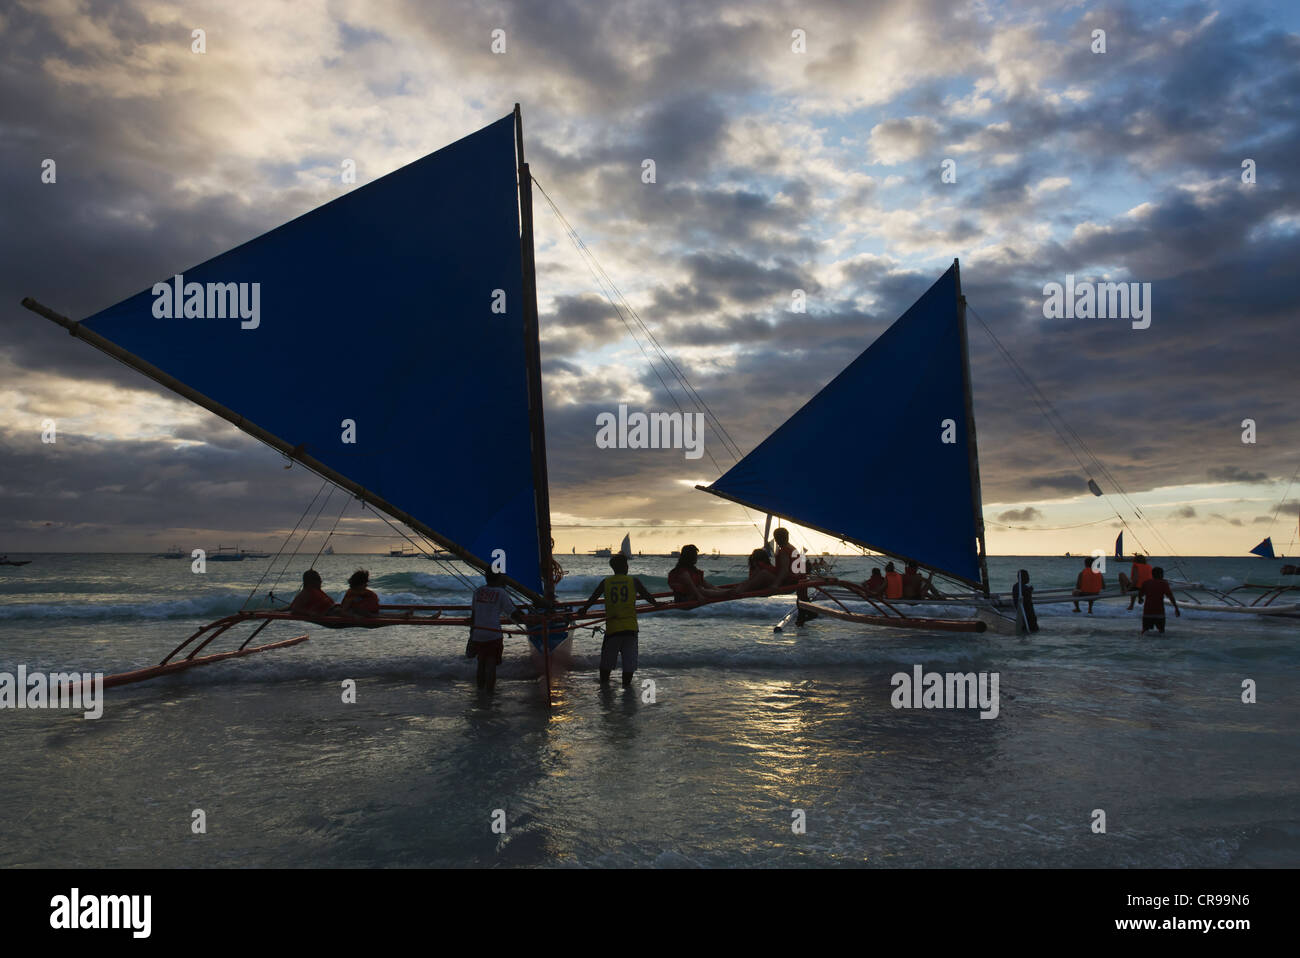 Sail boats at sunset, Boracay Island, Aklan Province, Philippines Stock Photo